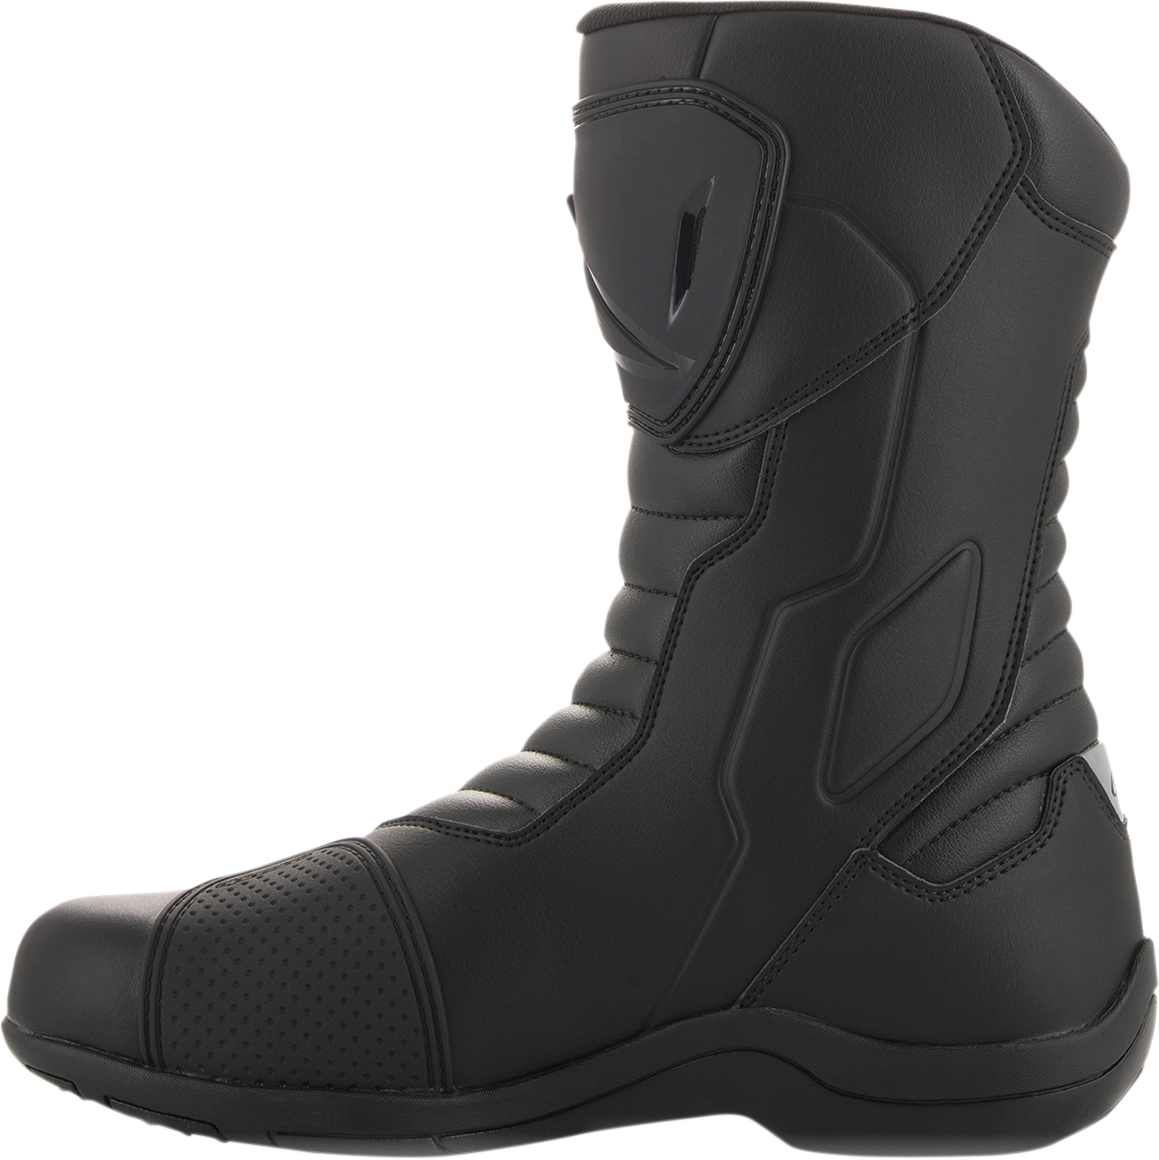 ALPINESTARS Radon Drystar® Boots - Black - US 10.5 / EU 45 2441518-10-45